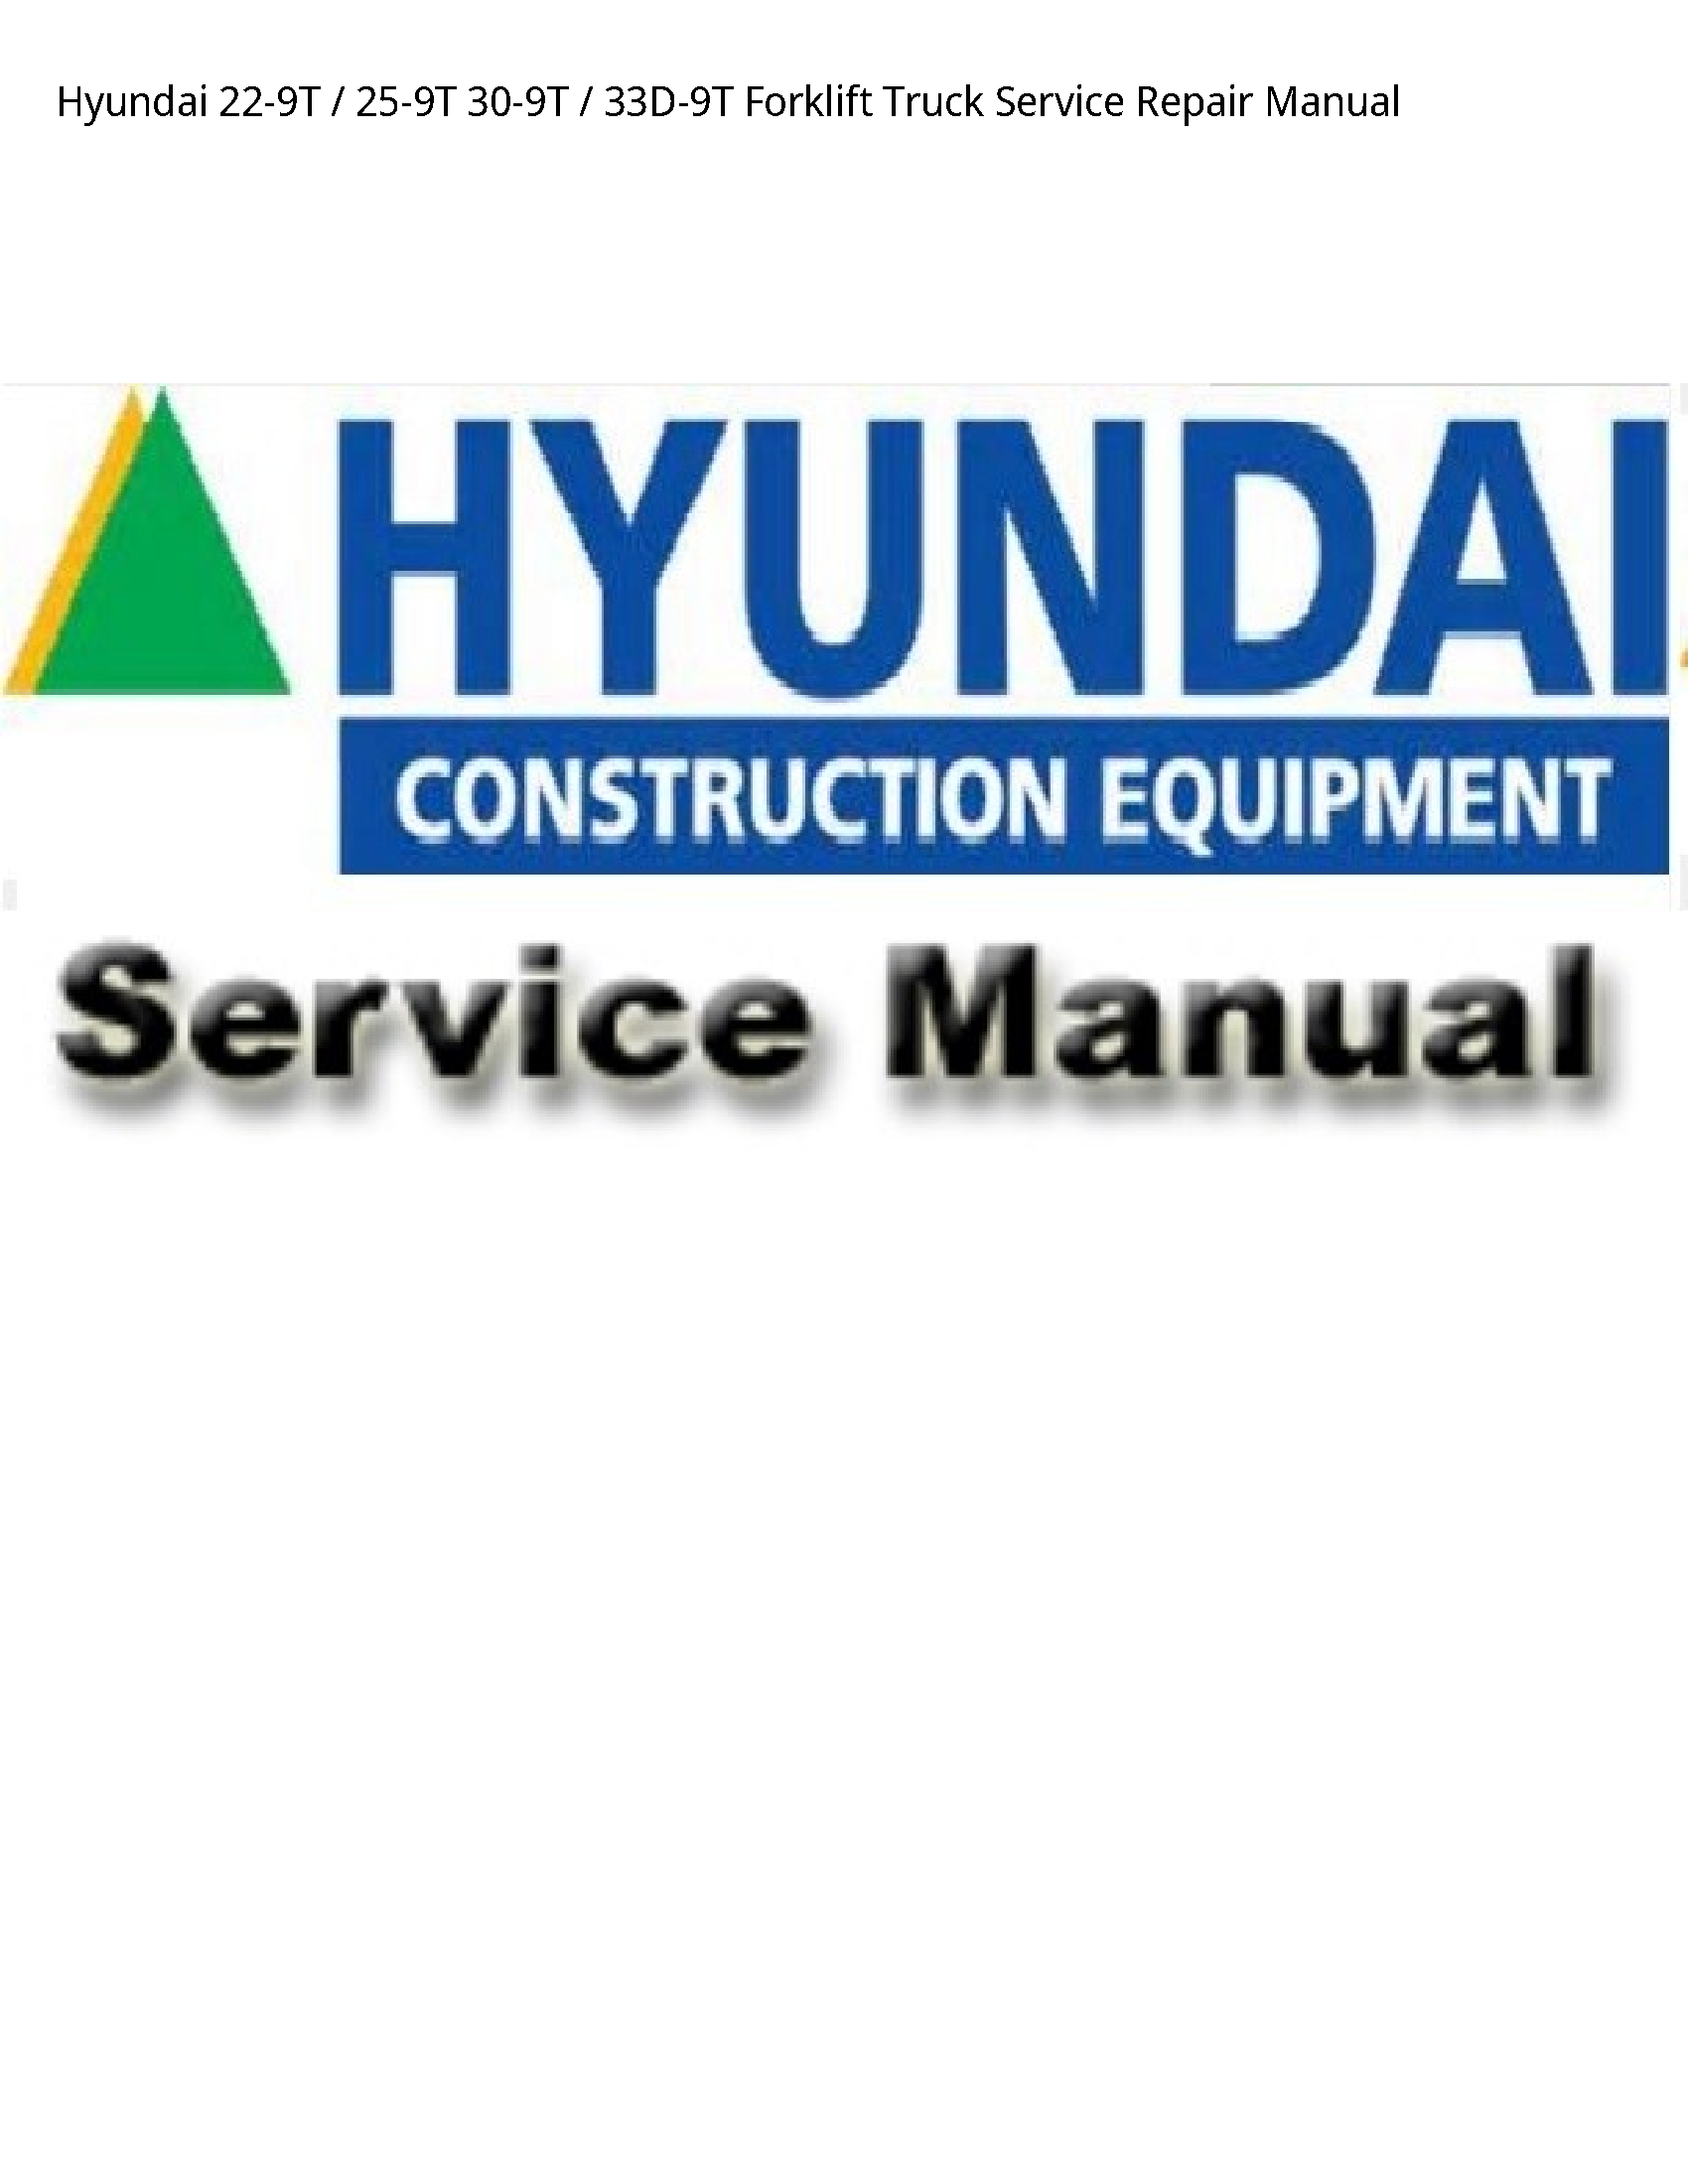 Hyundai 22-9T Forklift Truck manual